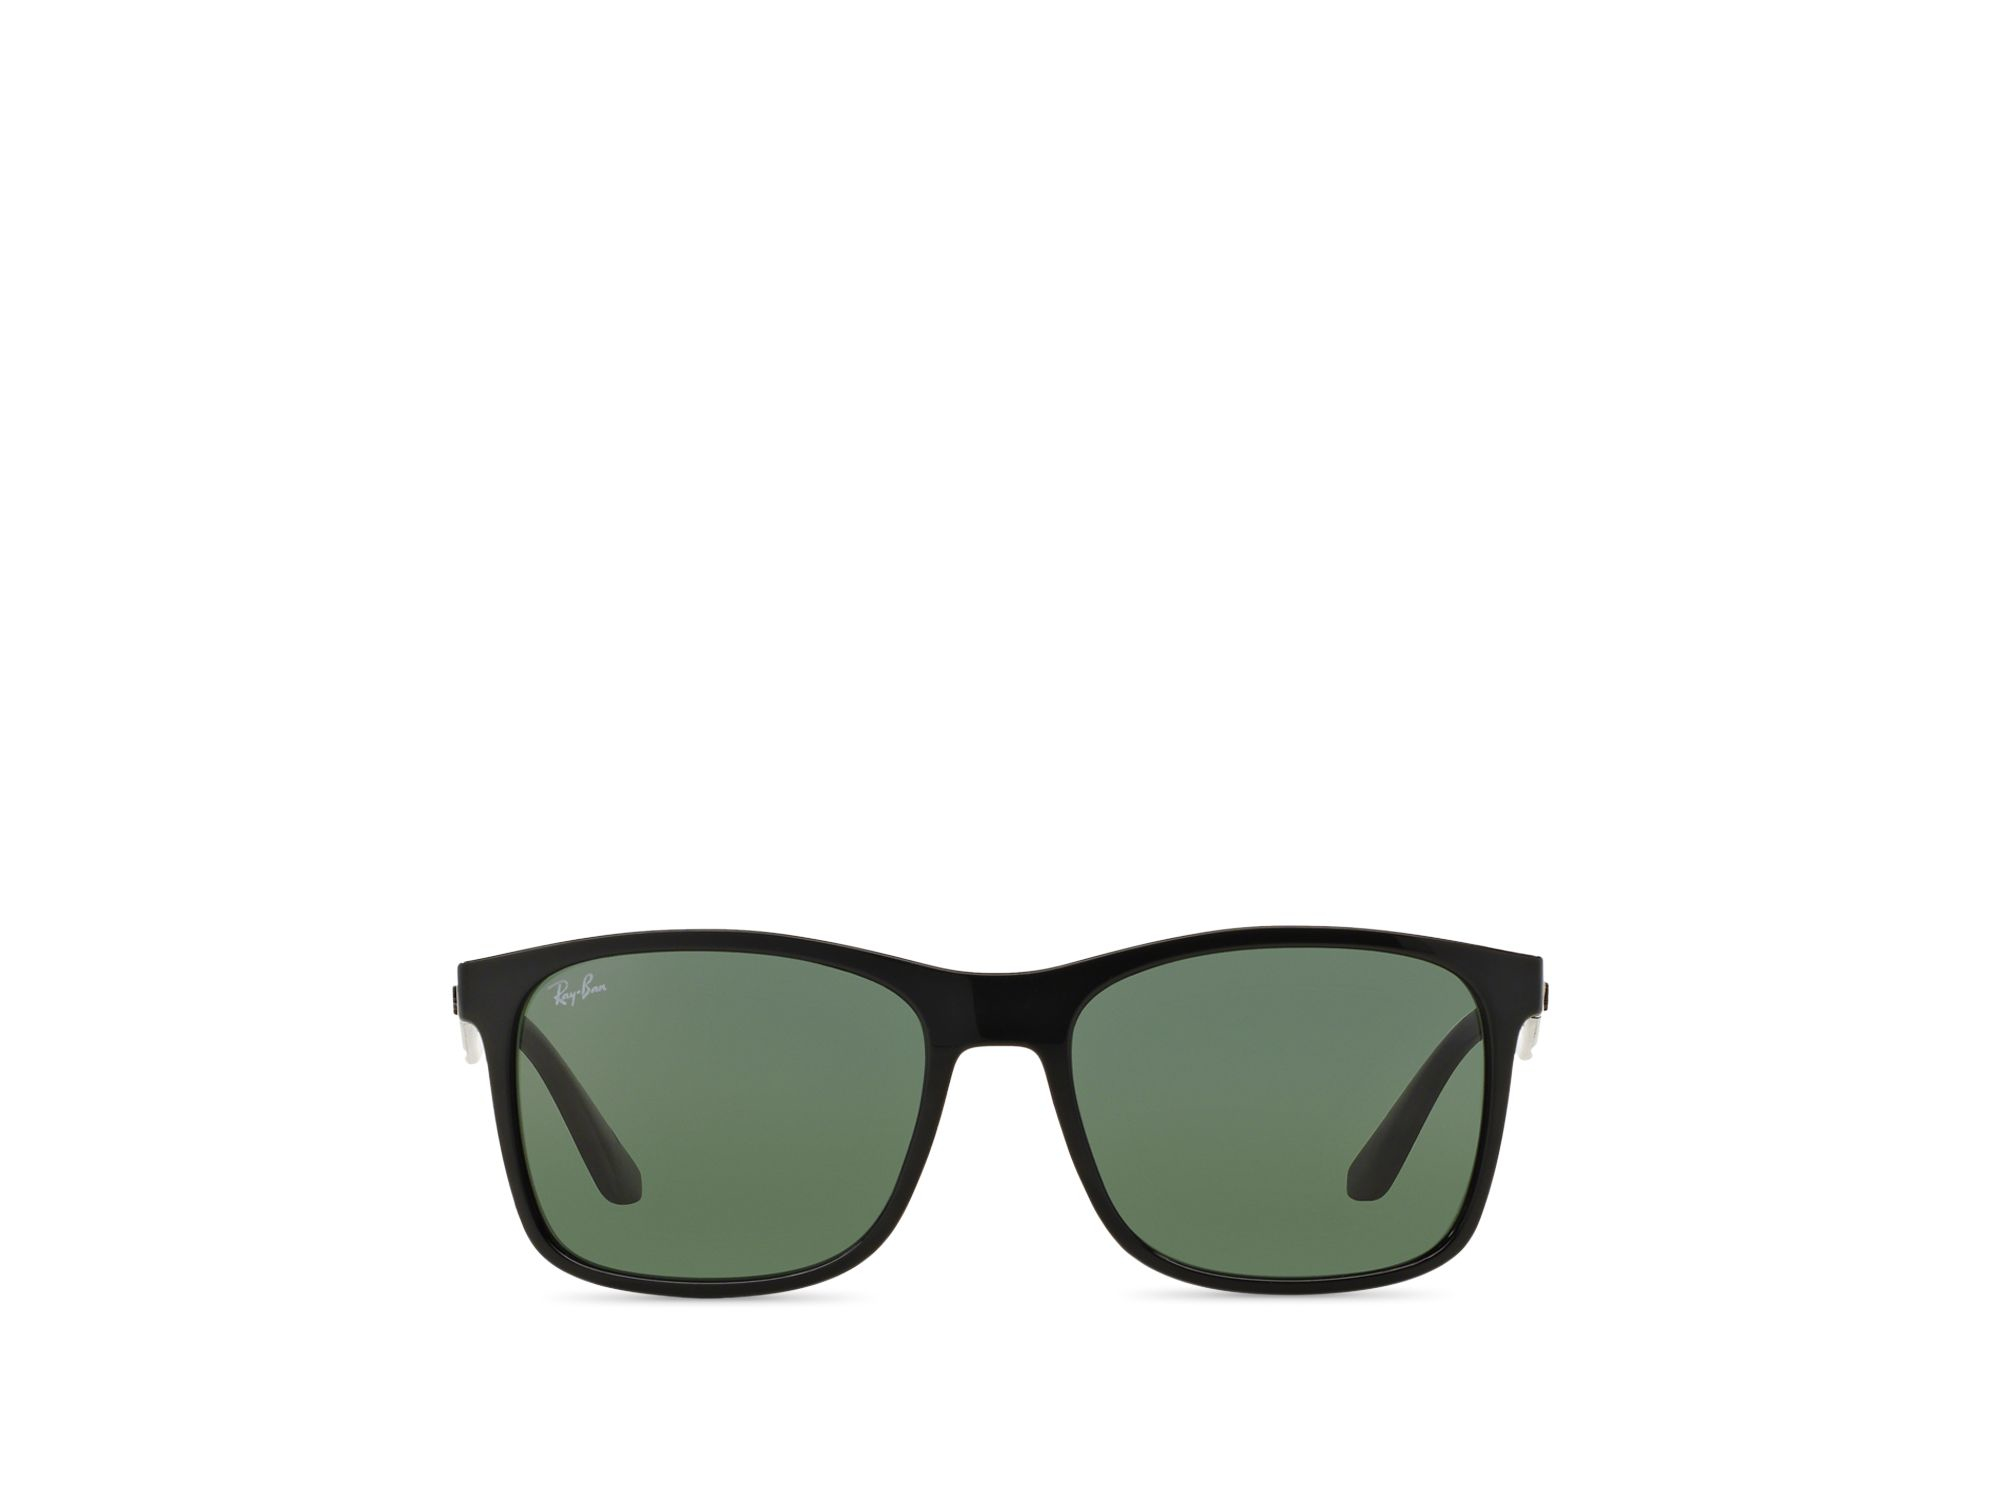 Lyst - Ray-Ban High Street Flat Top Square Sunglasses